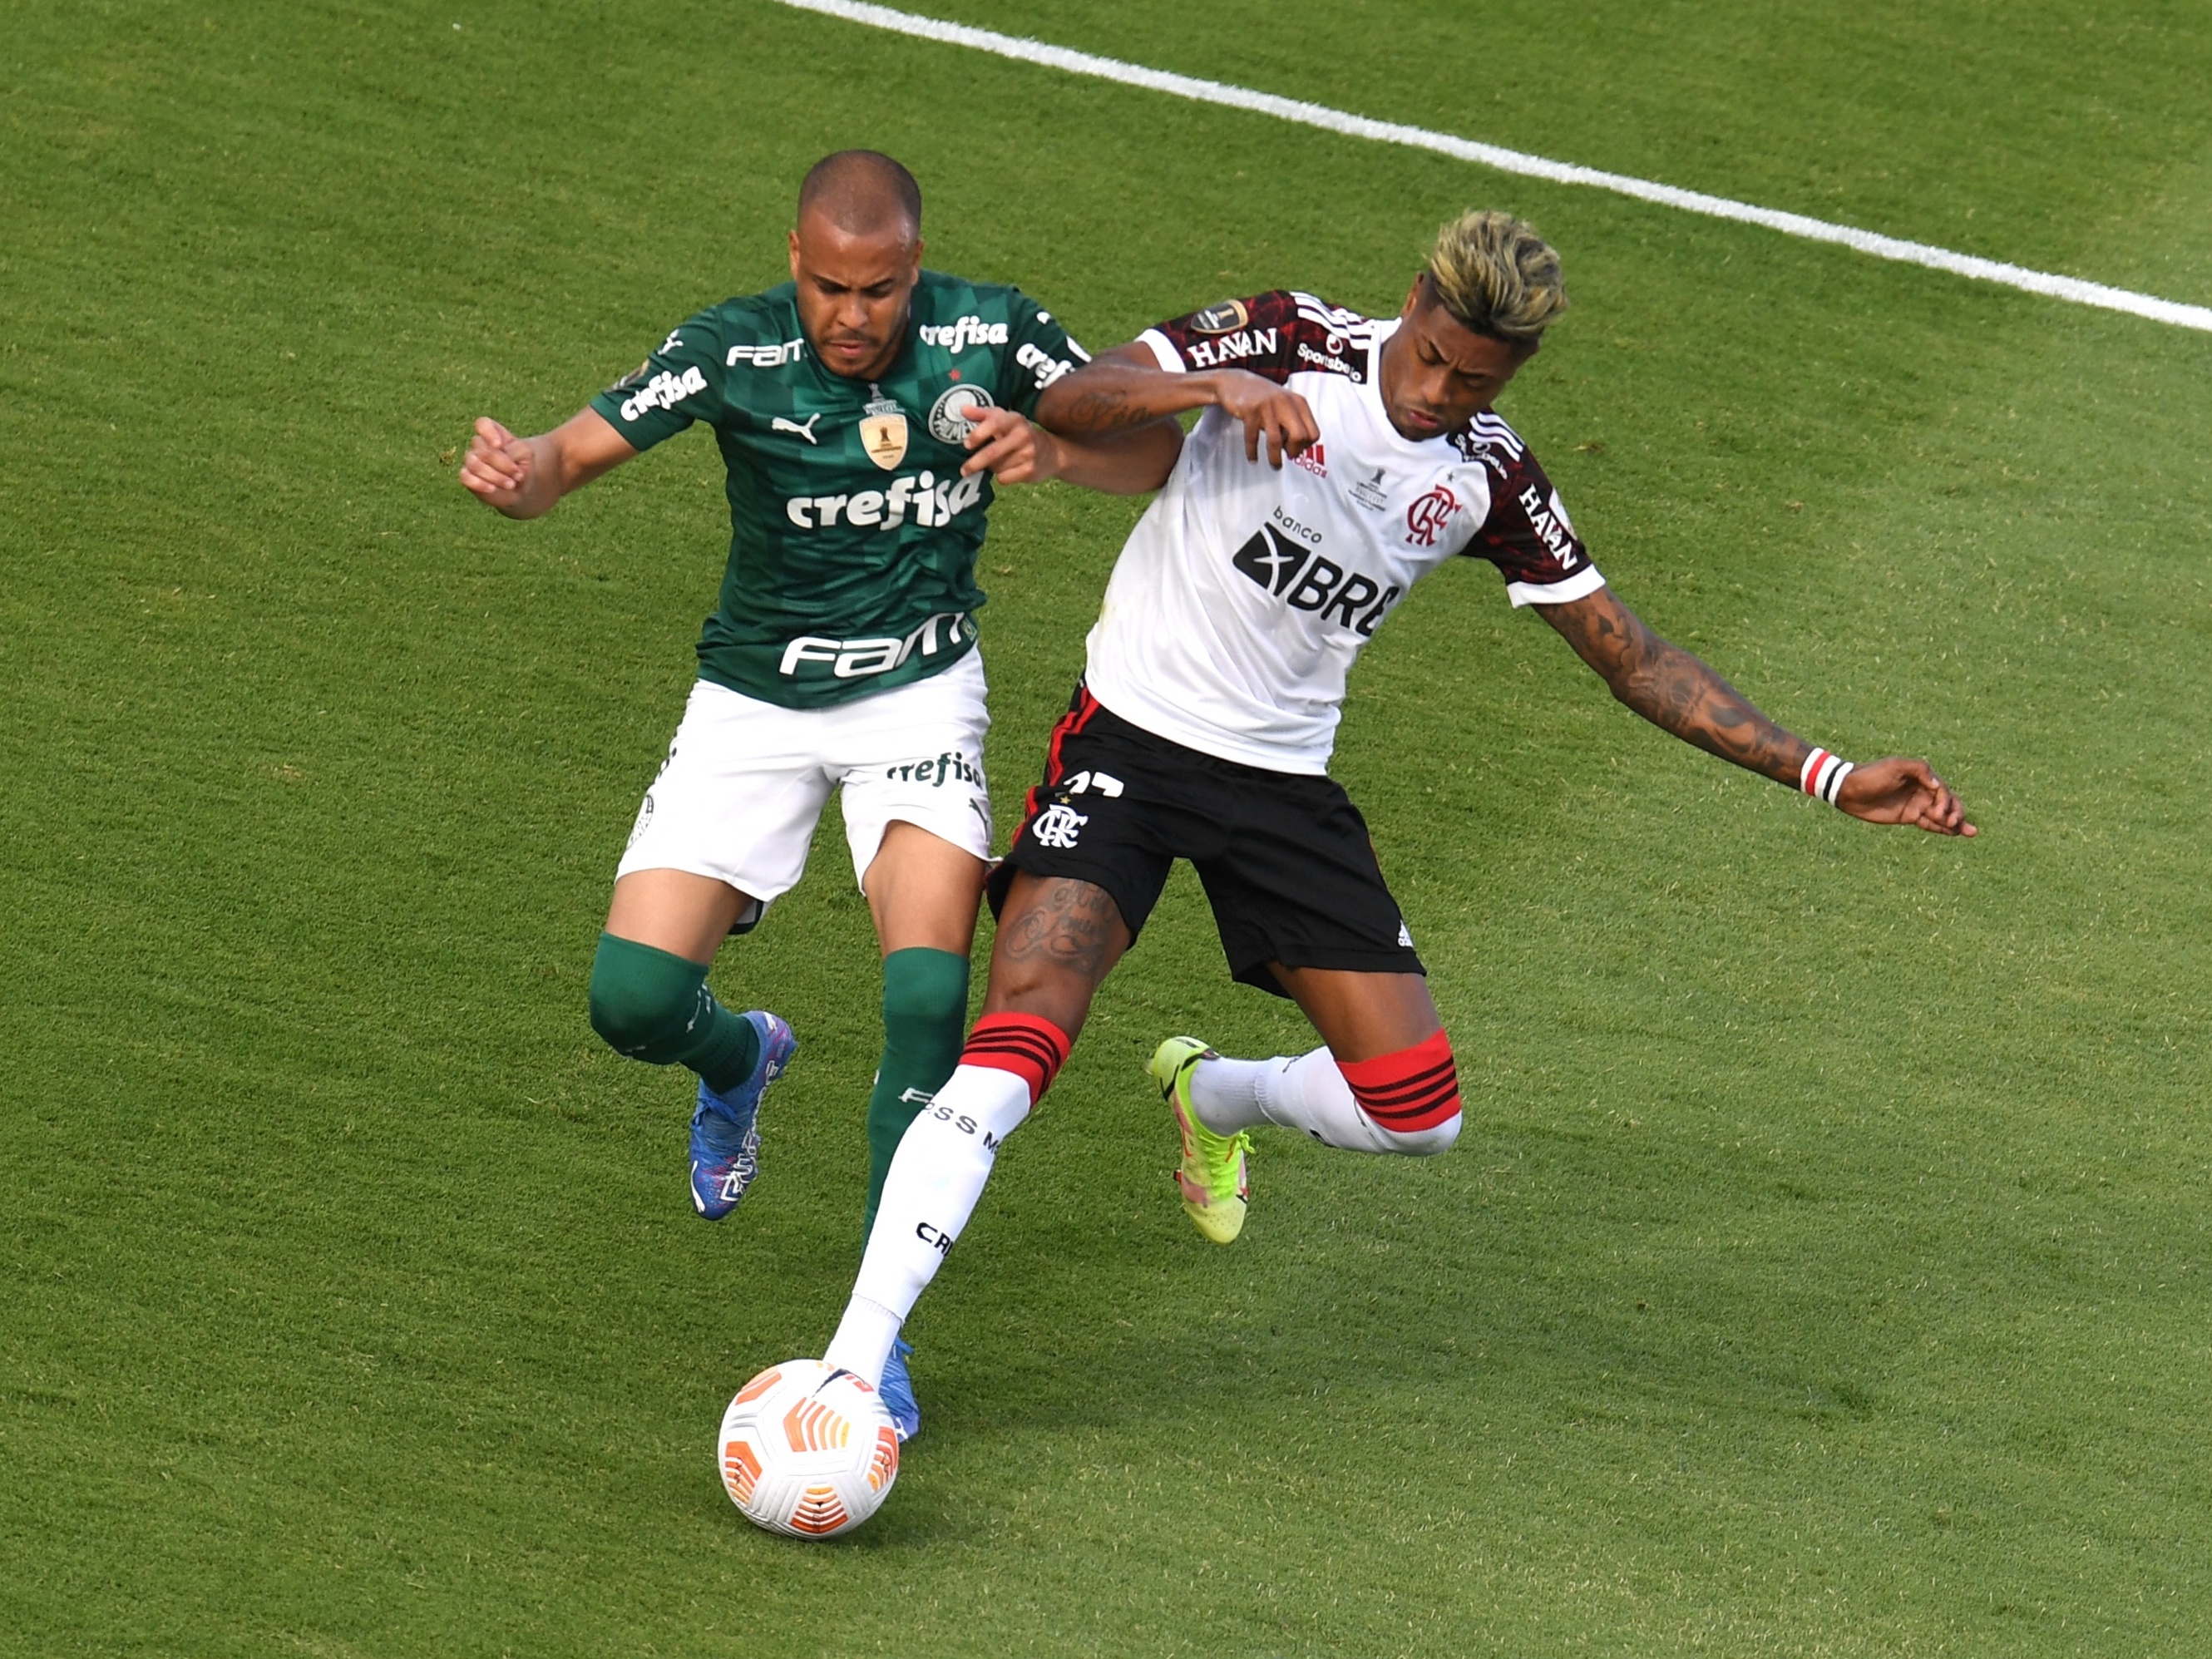 Bola de Cristal: veja chances de título de Palmeiras, Flamengo e